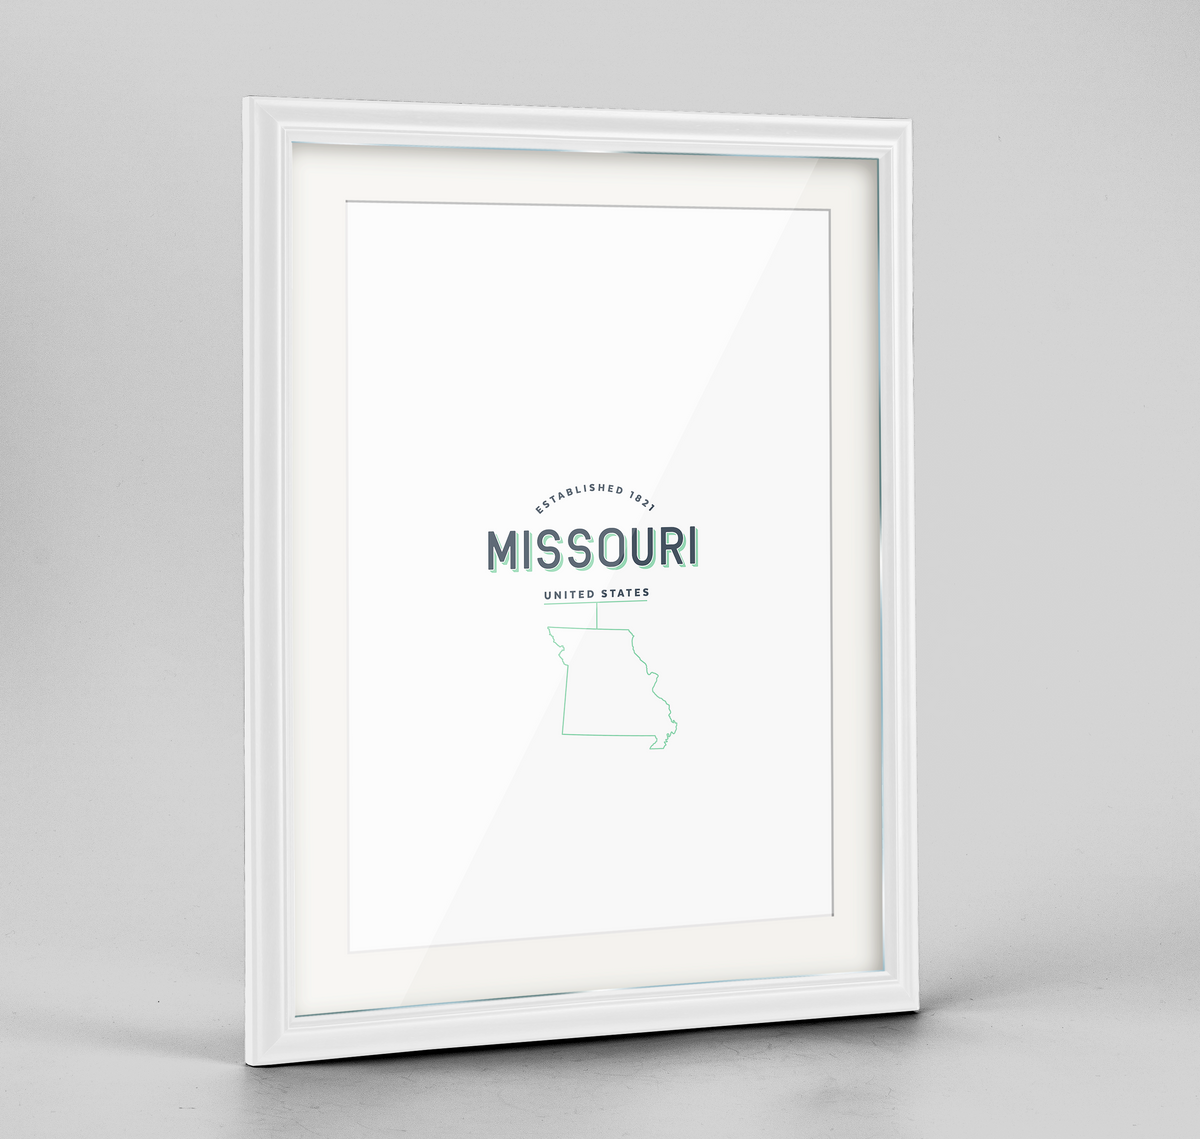 Missouri Word Art Frame Print - State Line